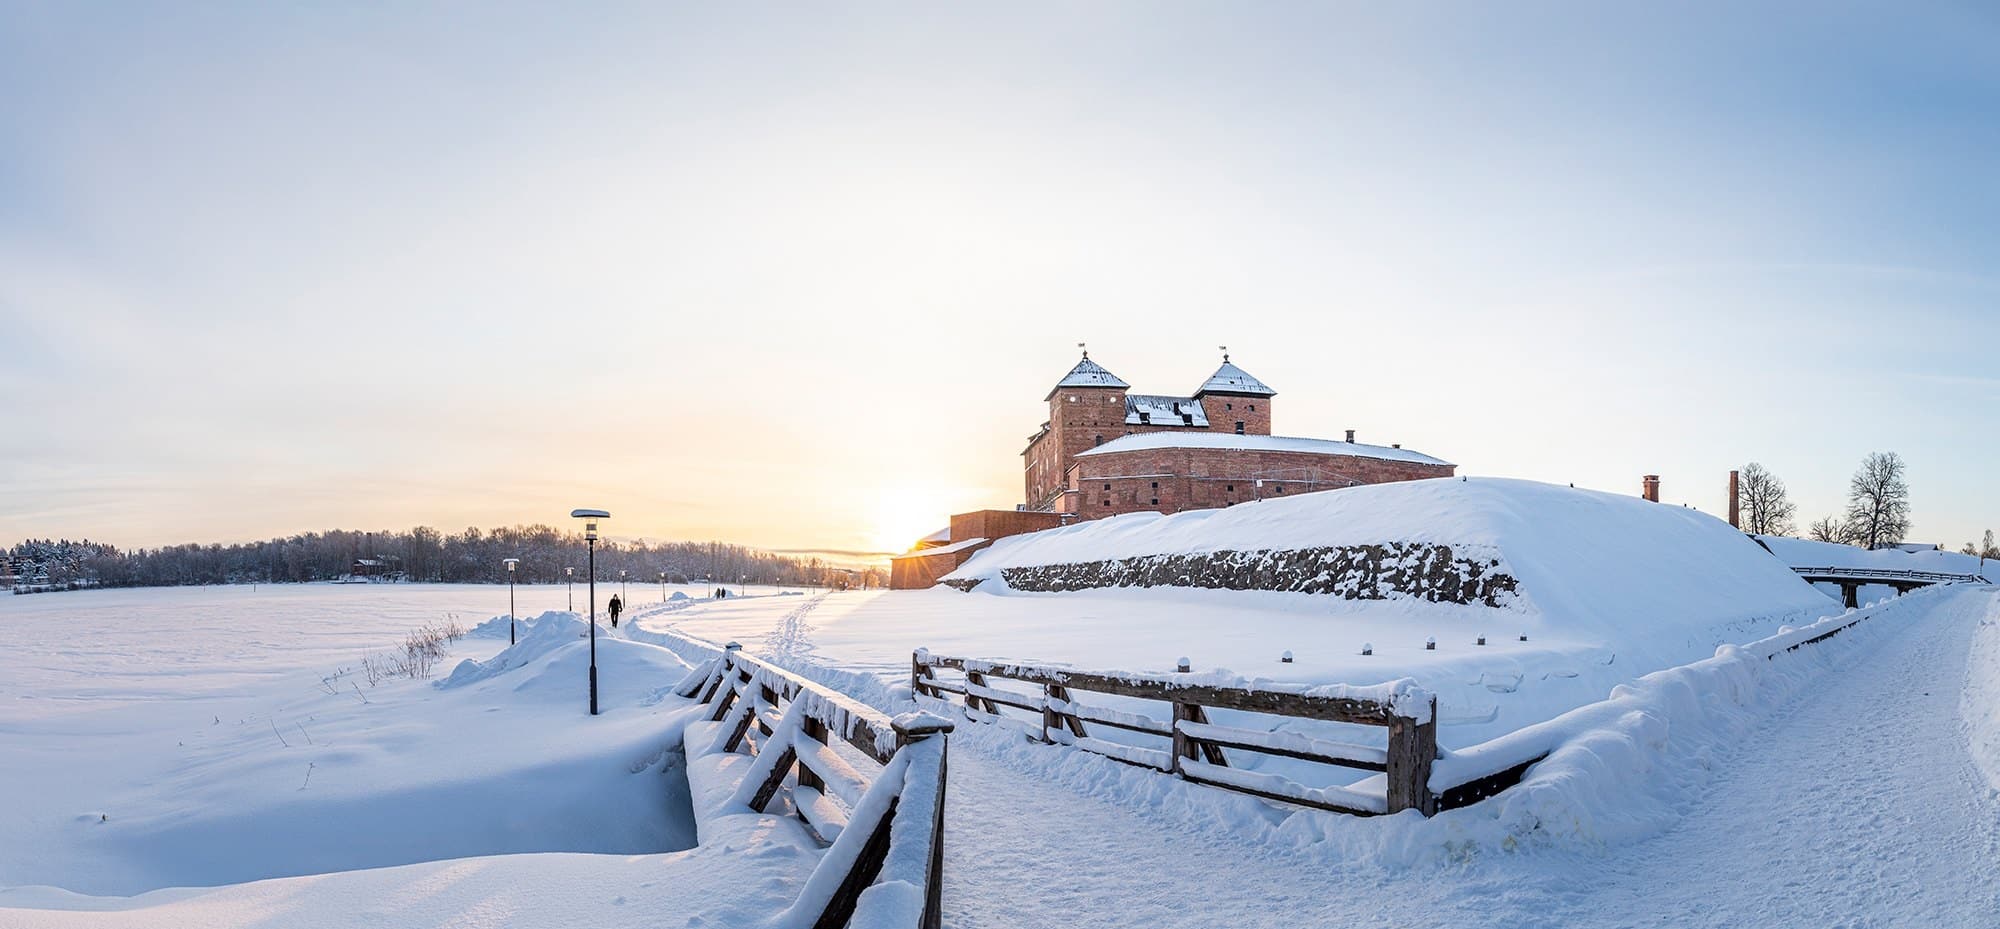 Häme castle in winter time